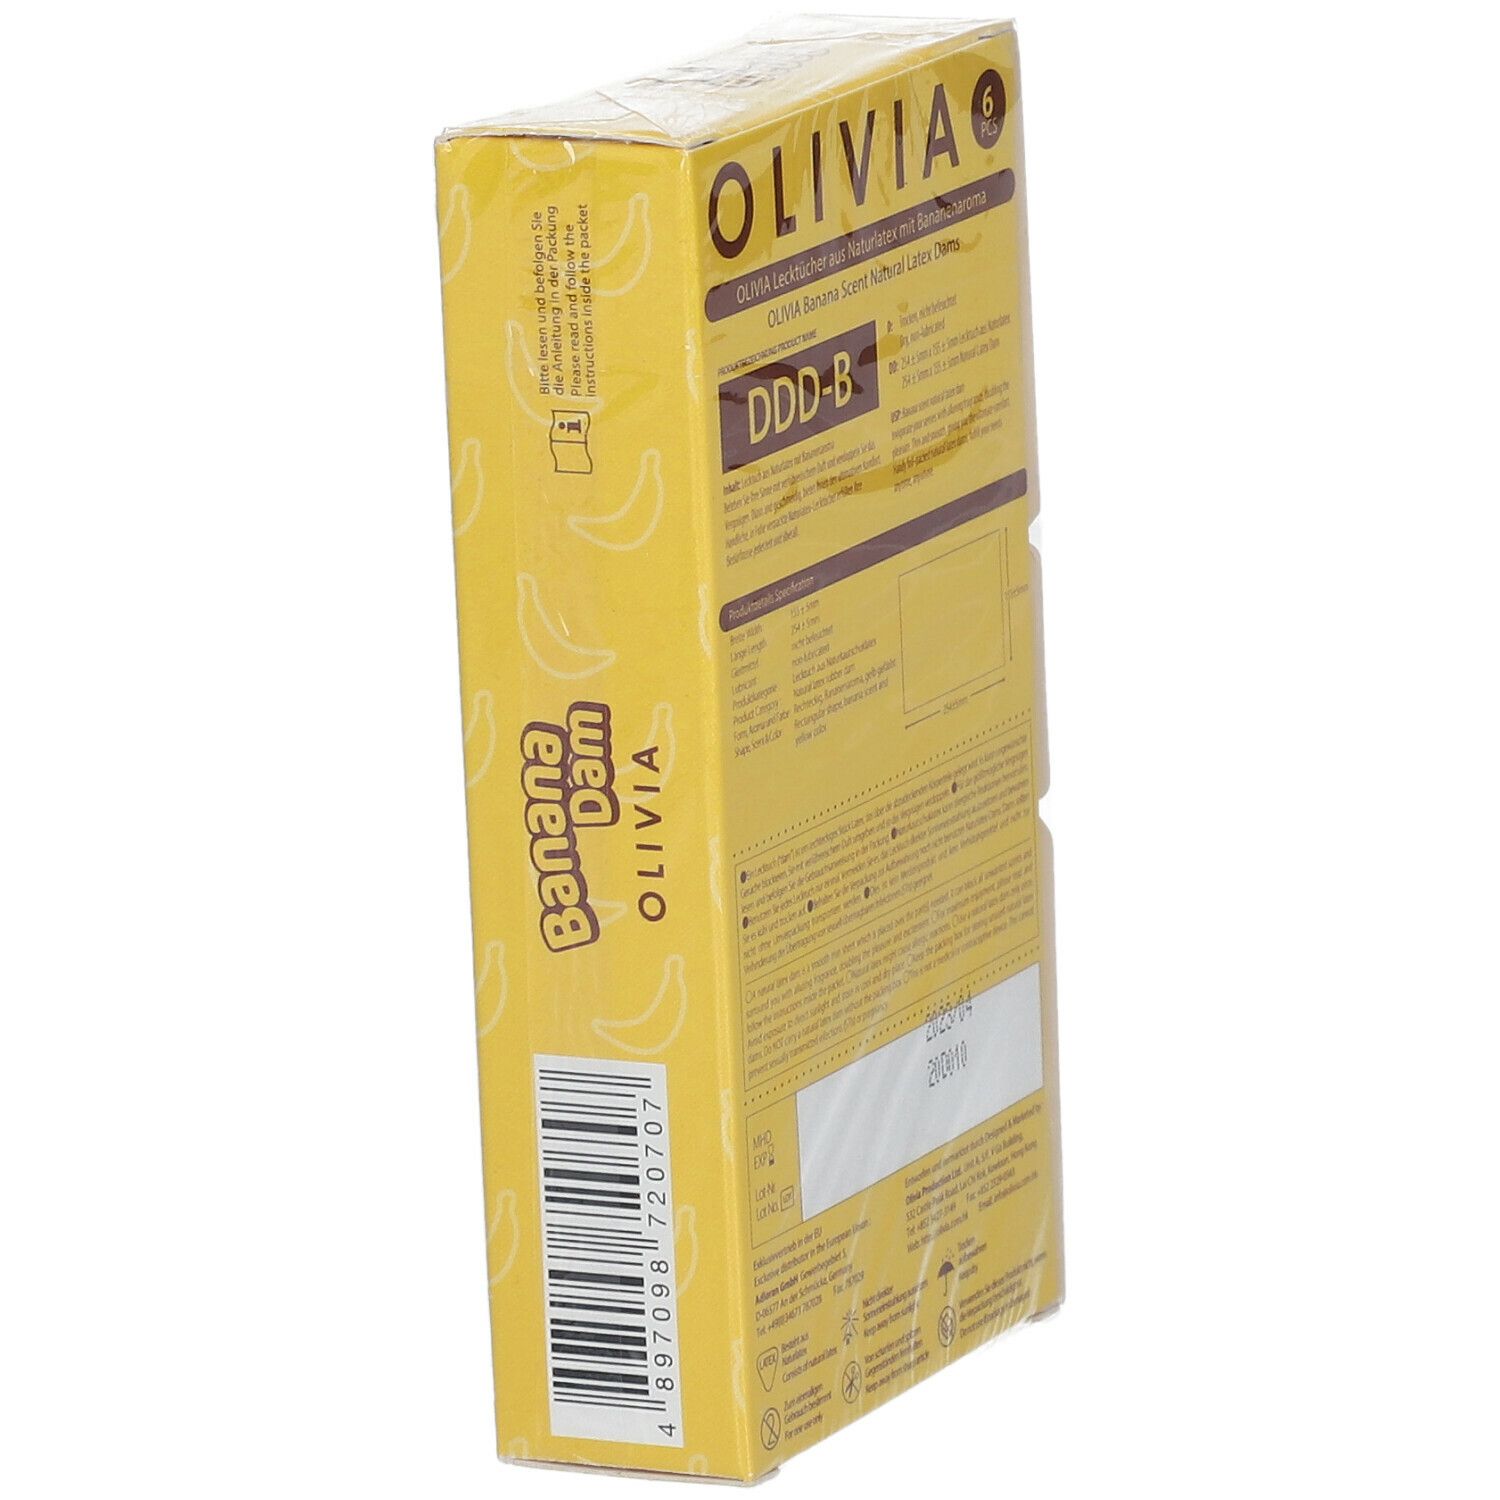 OLIVIA Lecktücher Banane